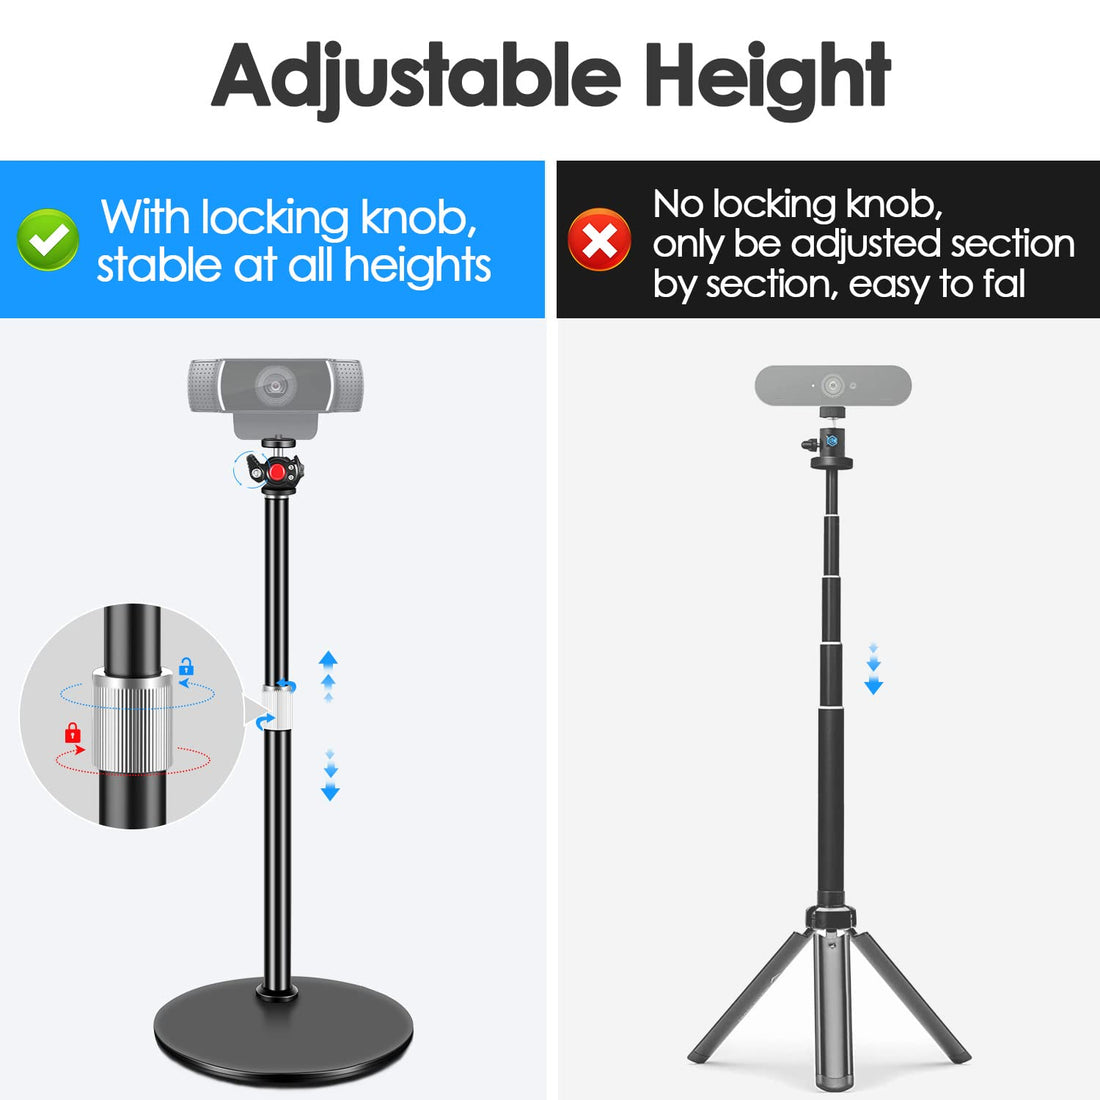 Nycetek Webcam Tripod Stand for Desk: Webcam Stand for Logitech Brio | C920 | C922 - Height & Angle Adjustable Desktop Tripod for Light & 1/4" Thread for Live Streaming | Video Calling